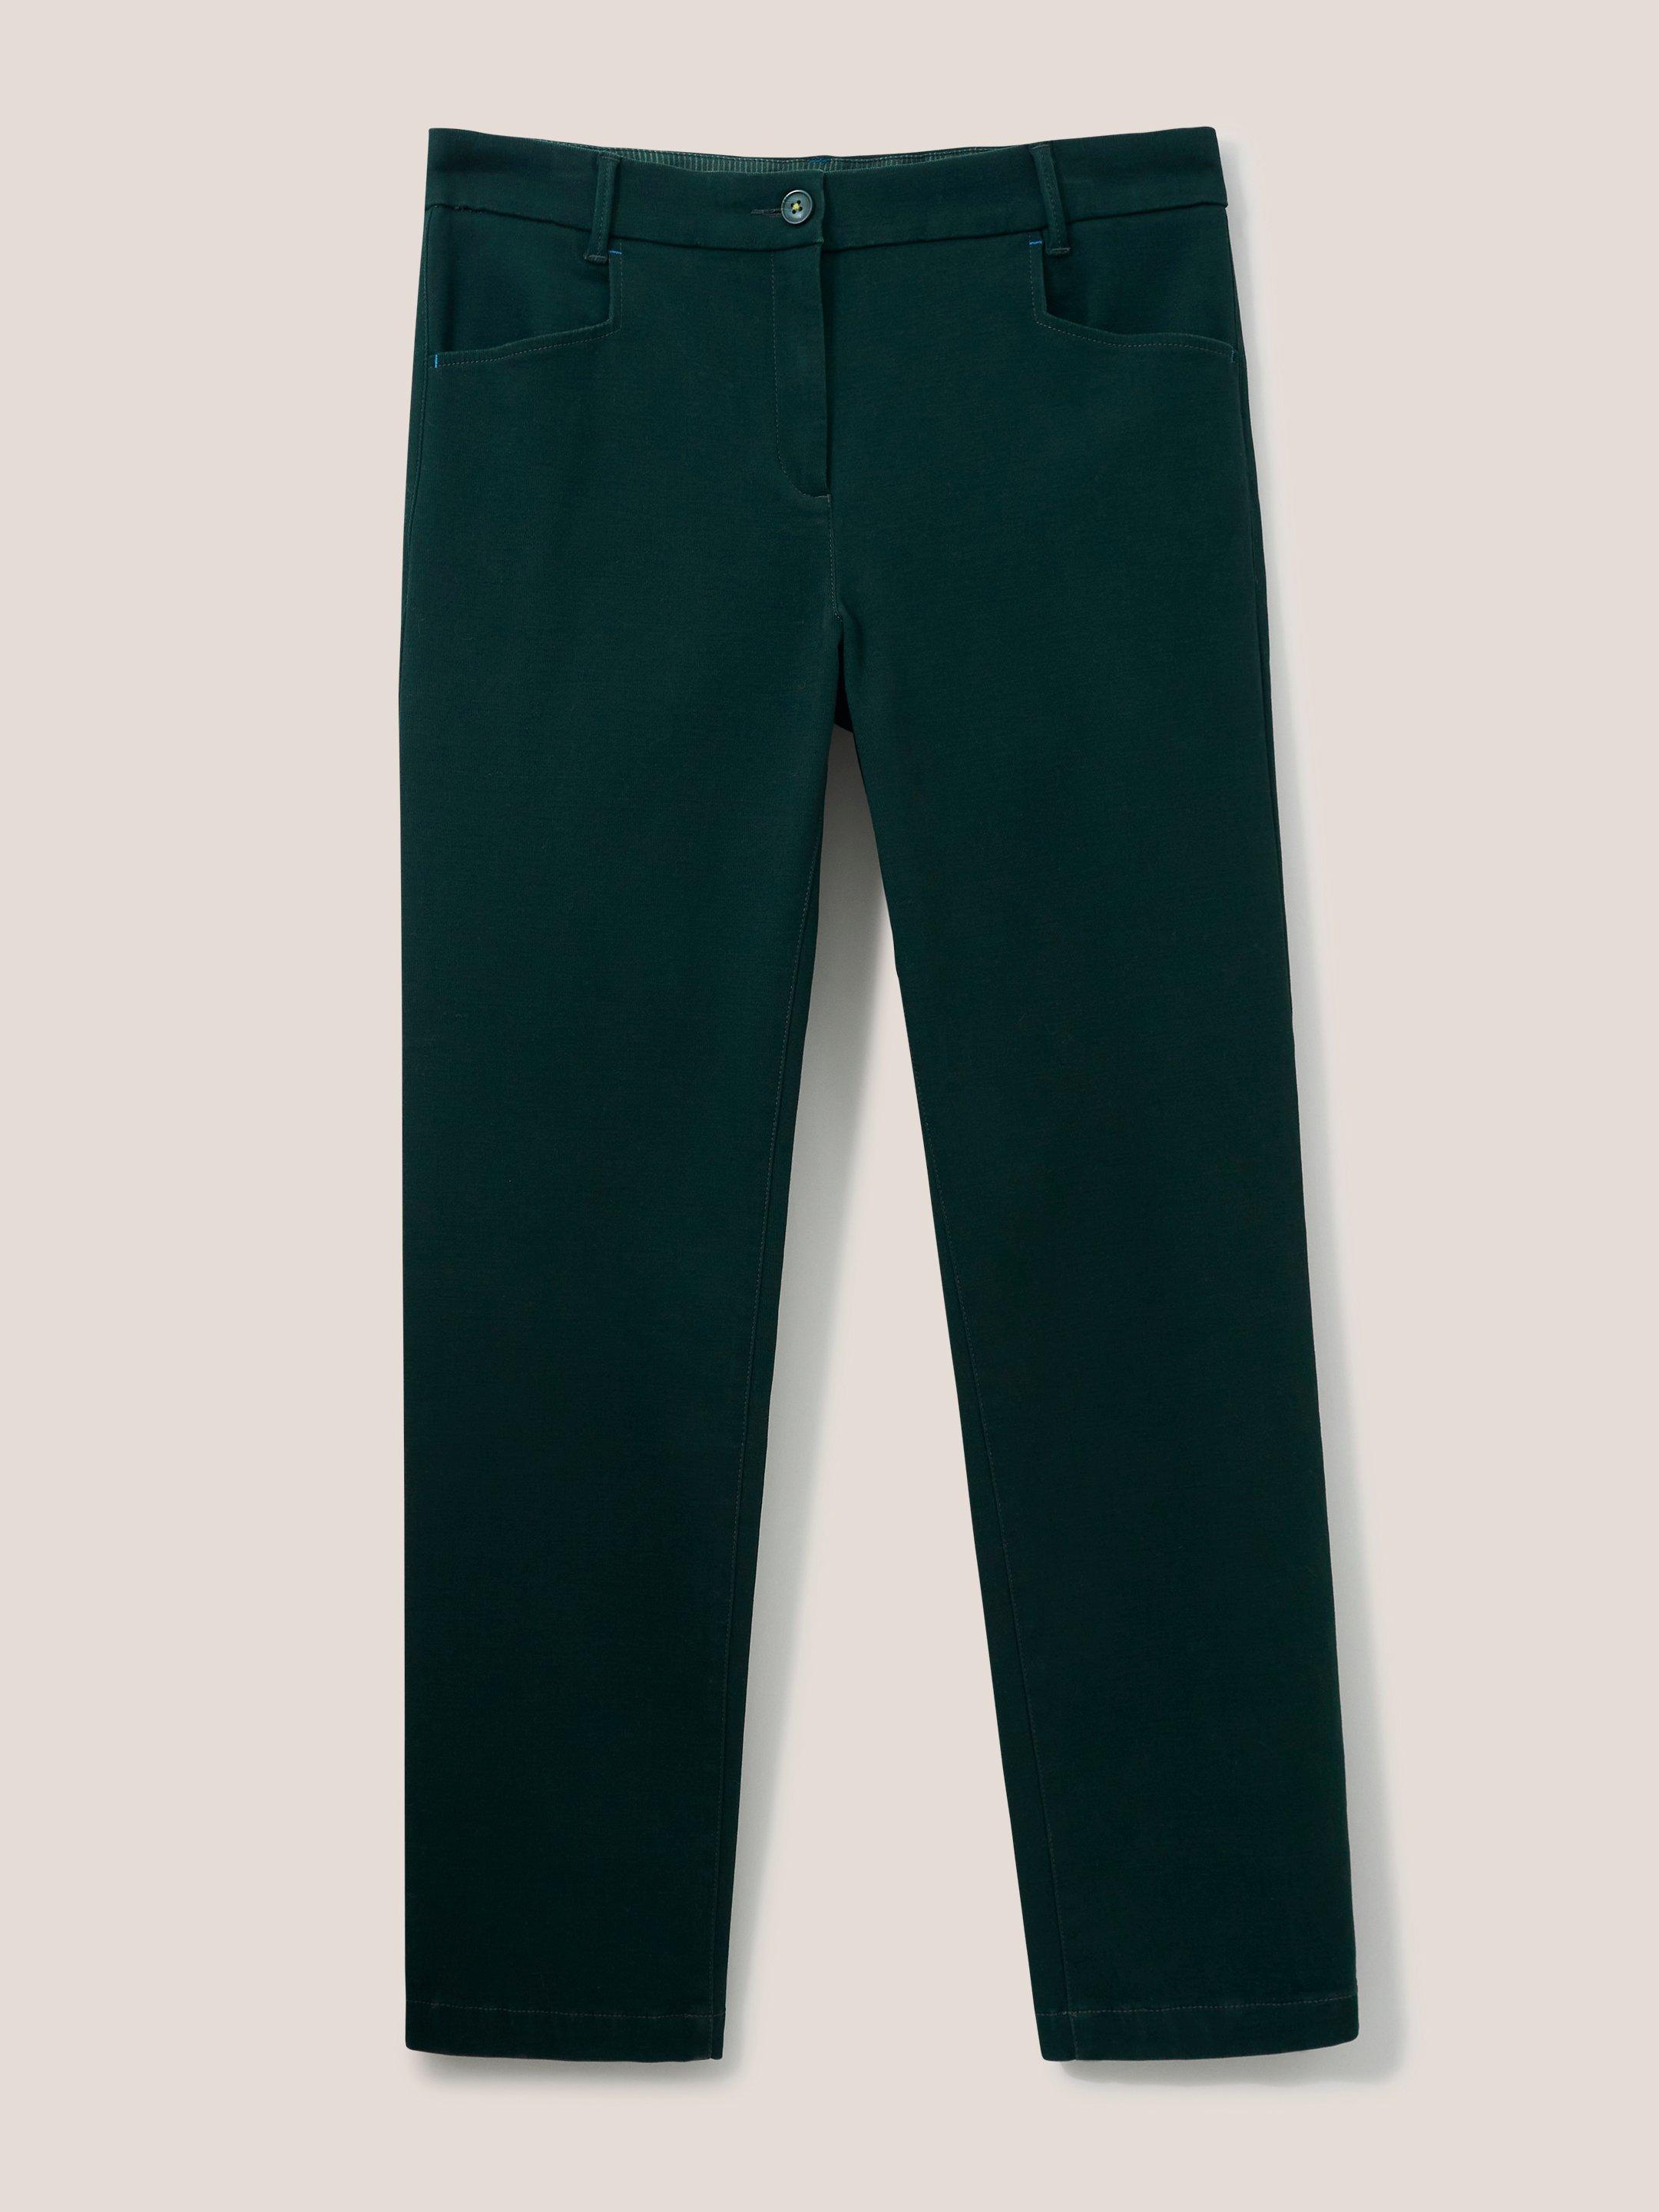 Sienna Stretch Trouser in DK GREEN - FLAT FRONT